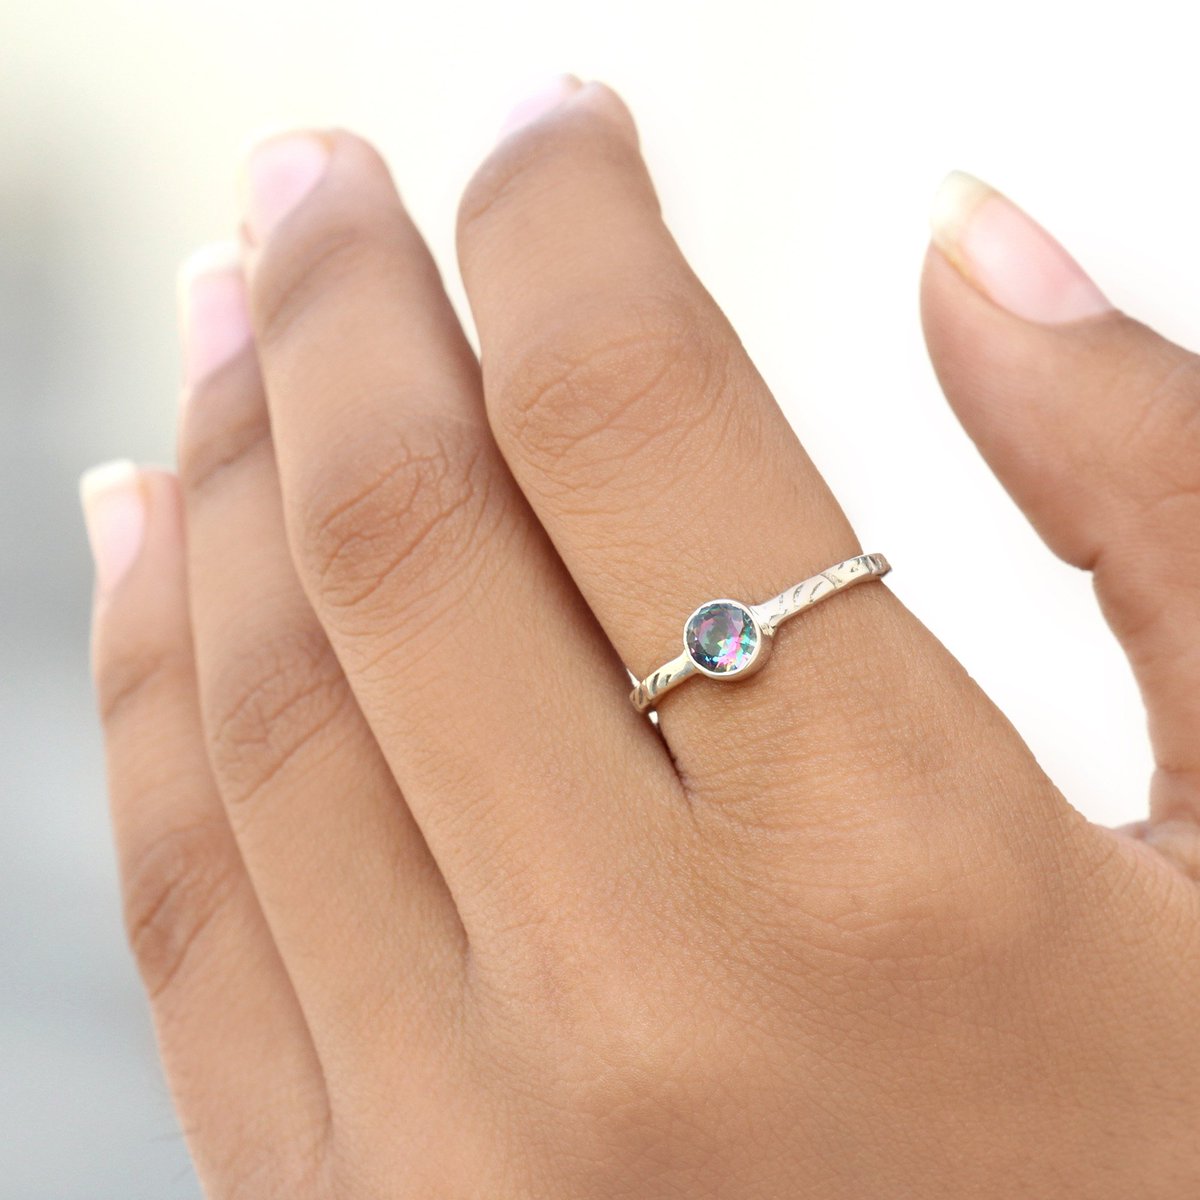 Mystic Topaz Ring, Rainbow Topaz Sterling Silver Ring

Buy At 
etsy.com/in-en/listing/…

#Mystictopazring #Simplering #Bohoring #Topazjewelry #Designerring #Midiring #Purposering #Rainbowquartz #multicolorring #Promisering #Engagementring